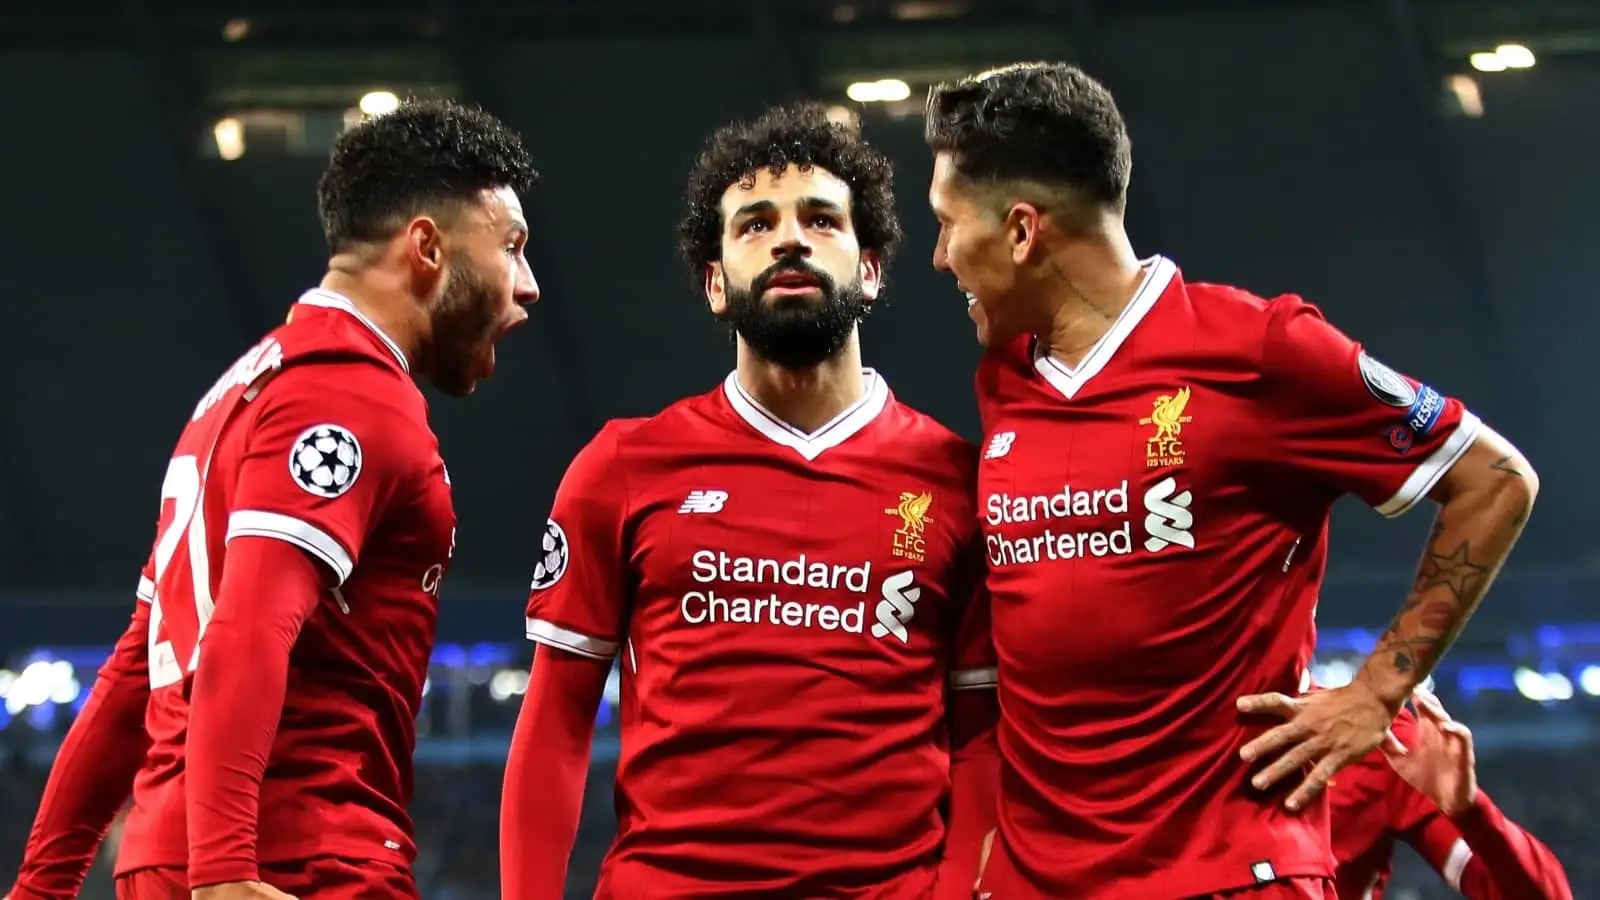 Alex Oxlade-Chamberlain, Mo Salah and Roberto Firmino of Liverpool